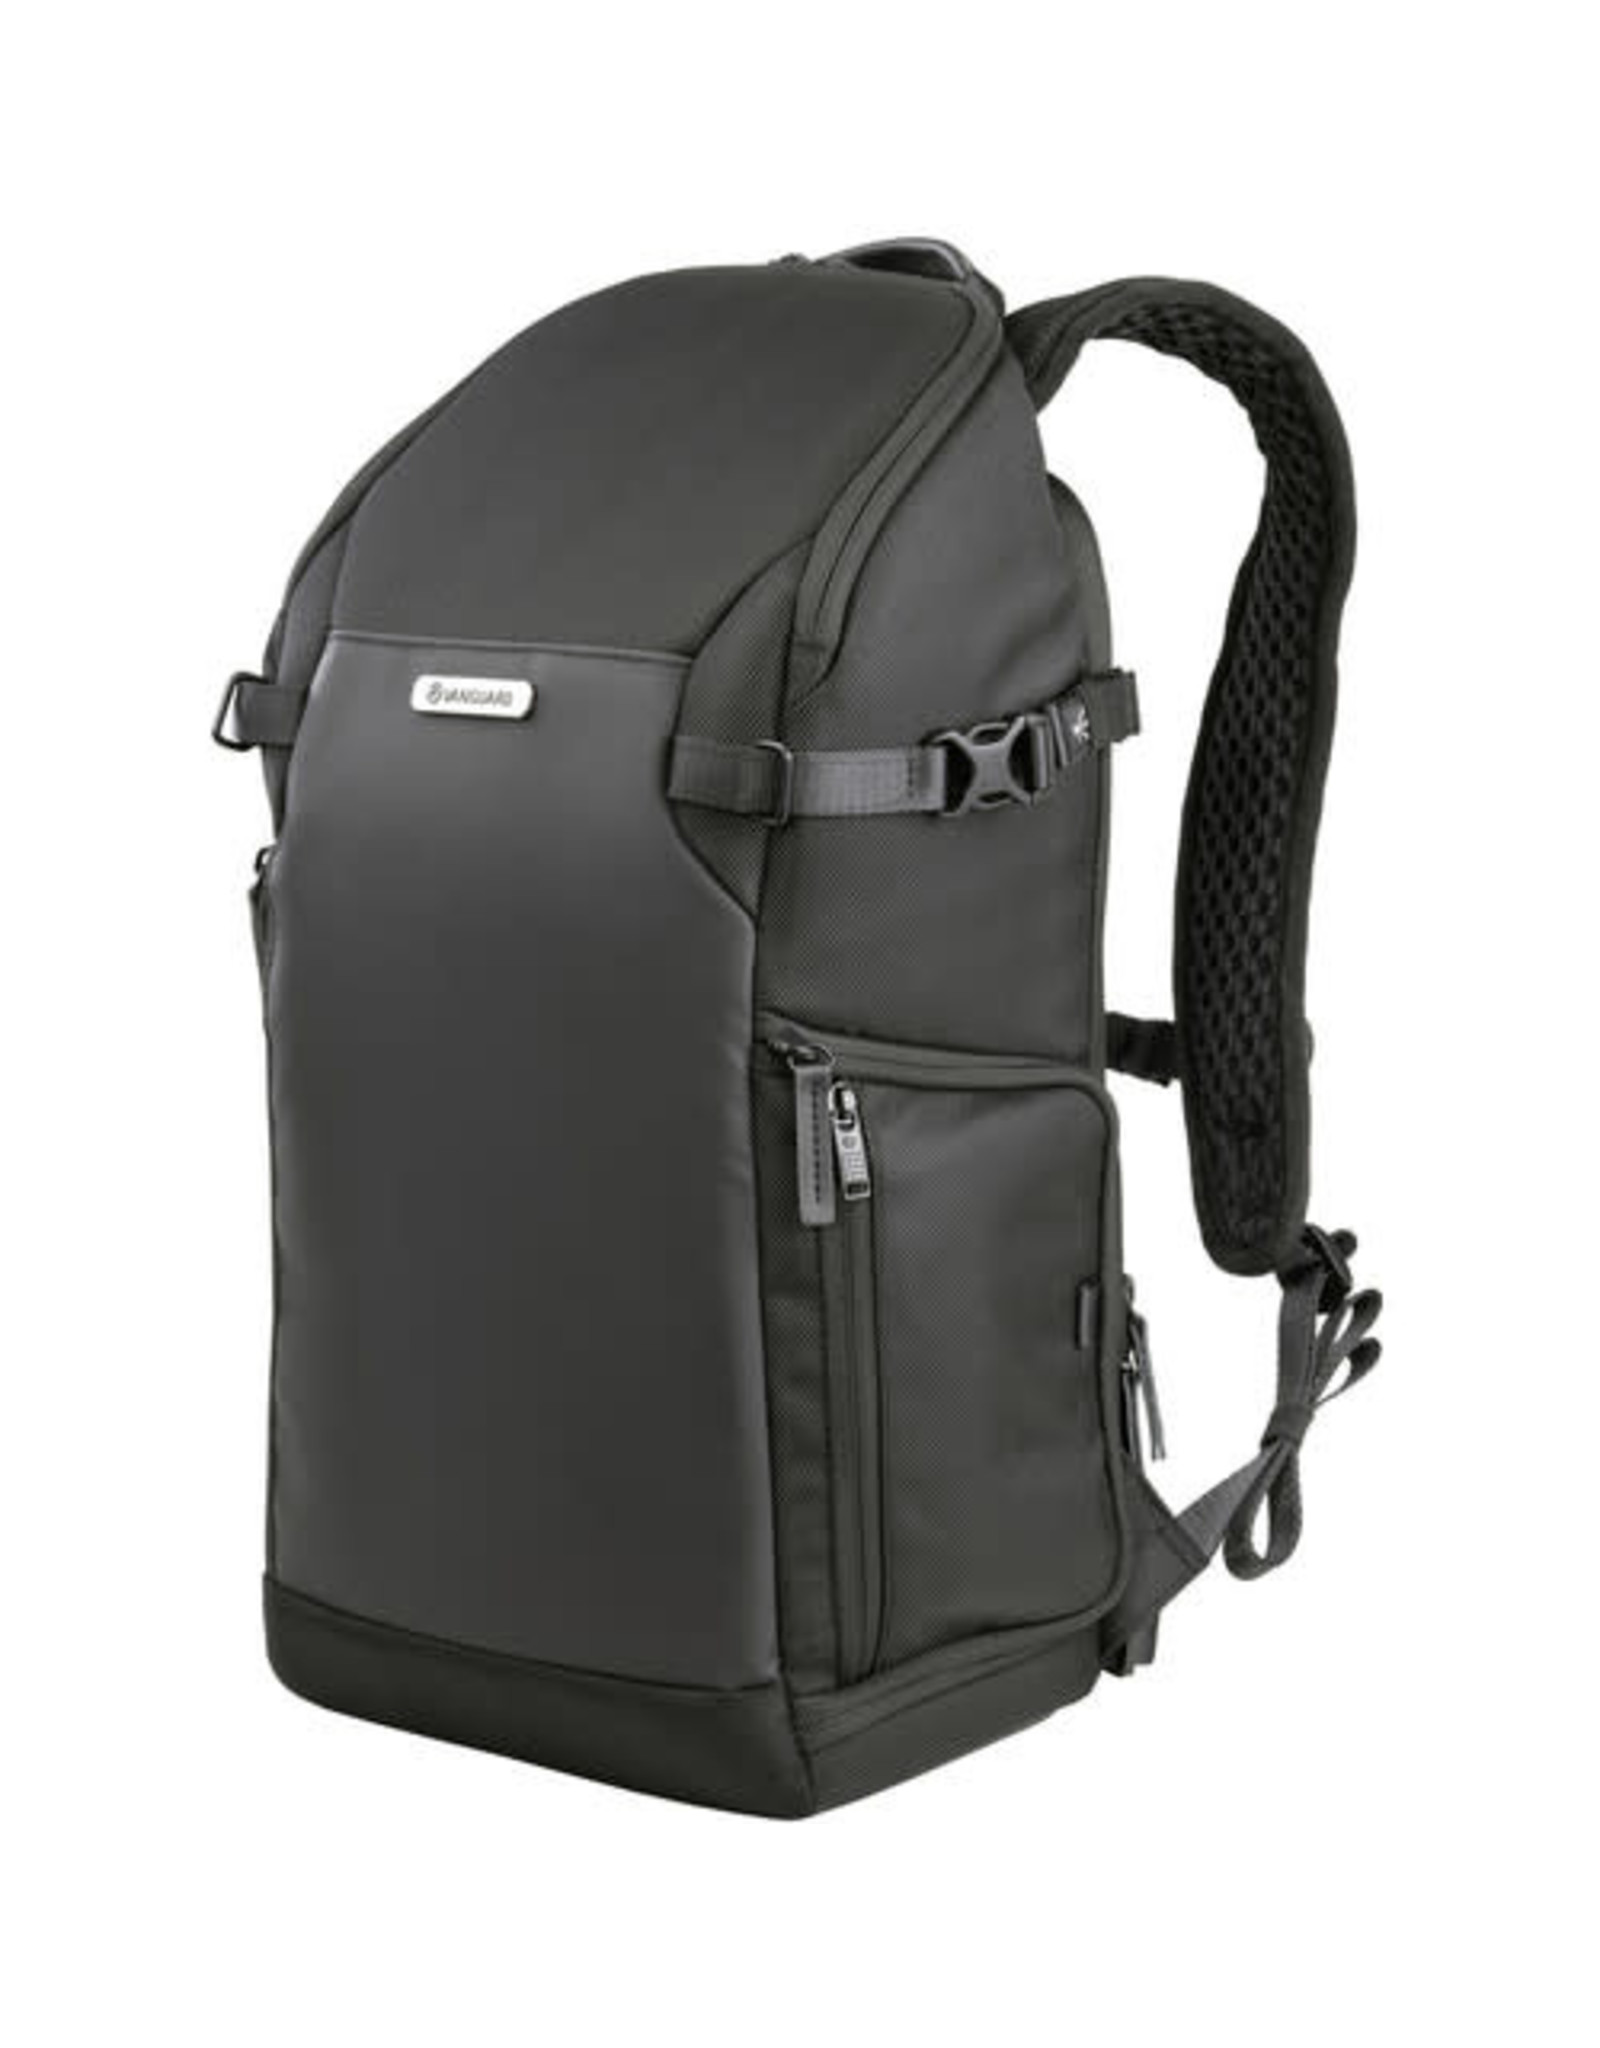 Vanguard Vanguard VEO Select 46BR Backpack (Choose Color)